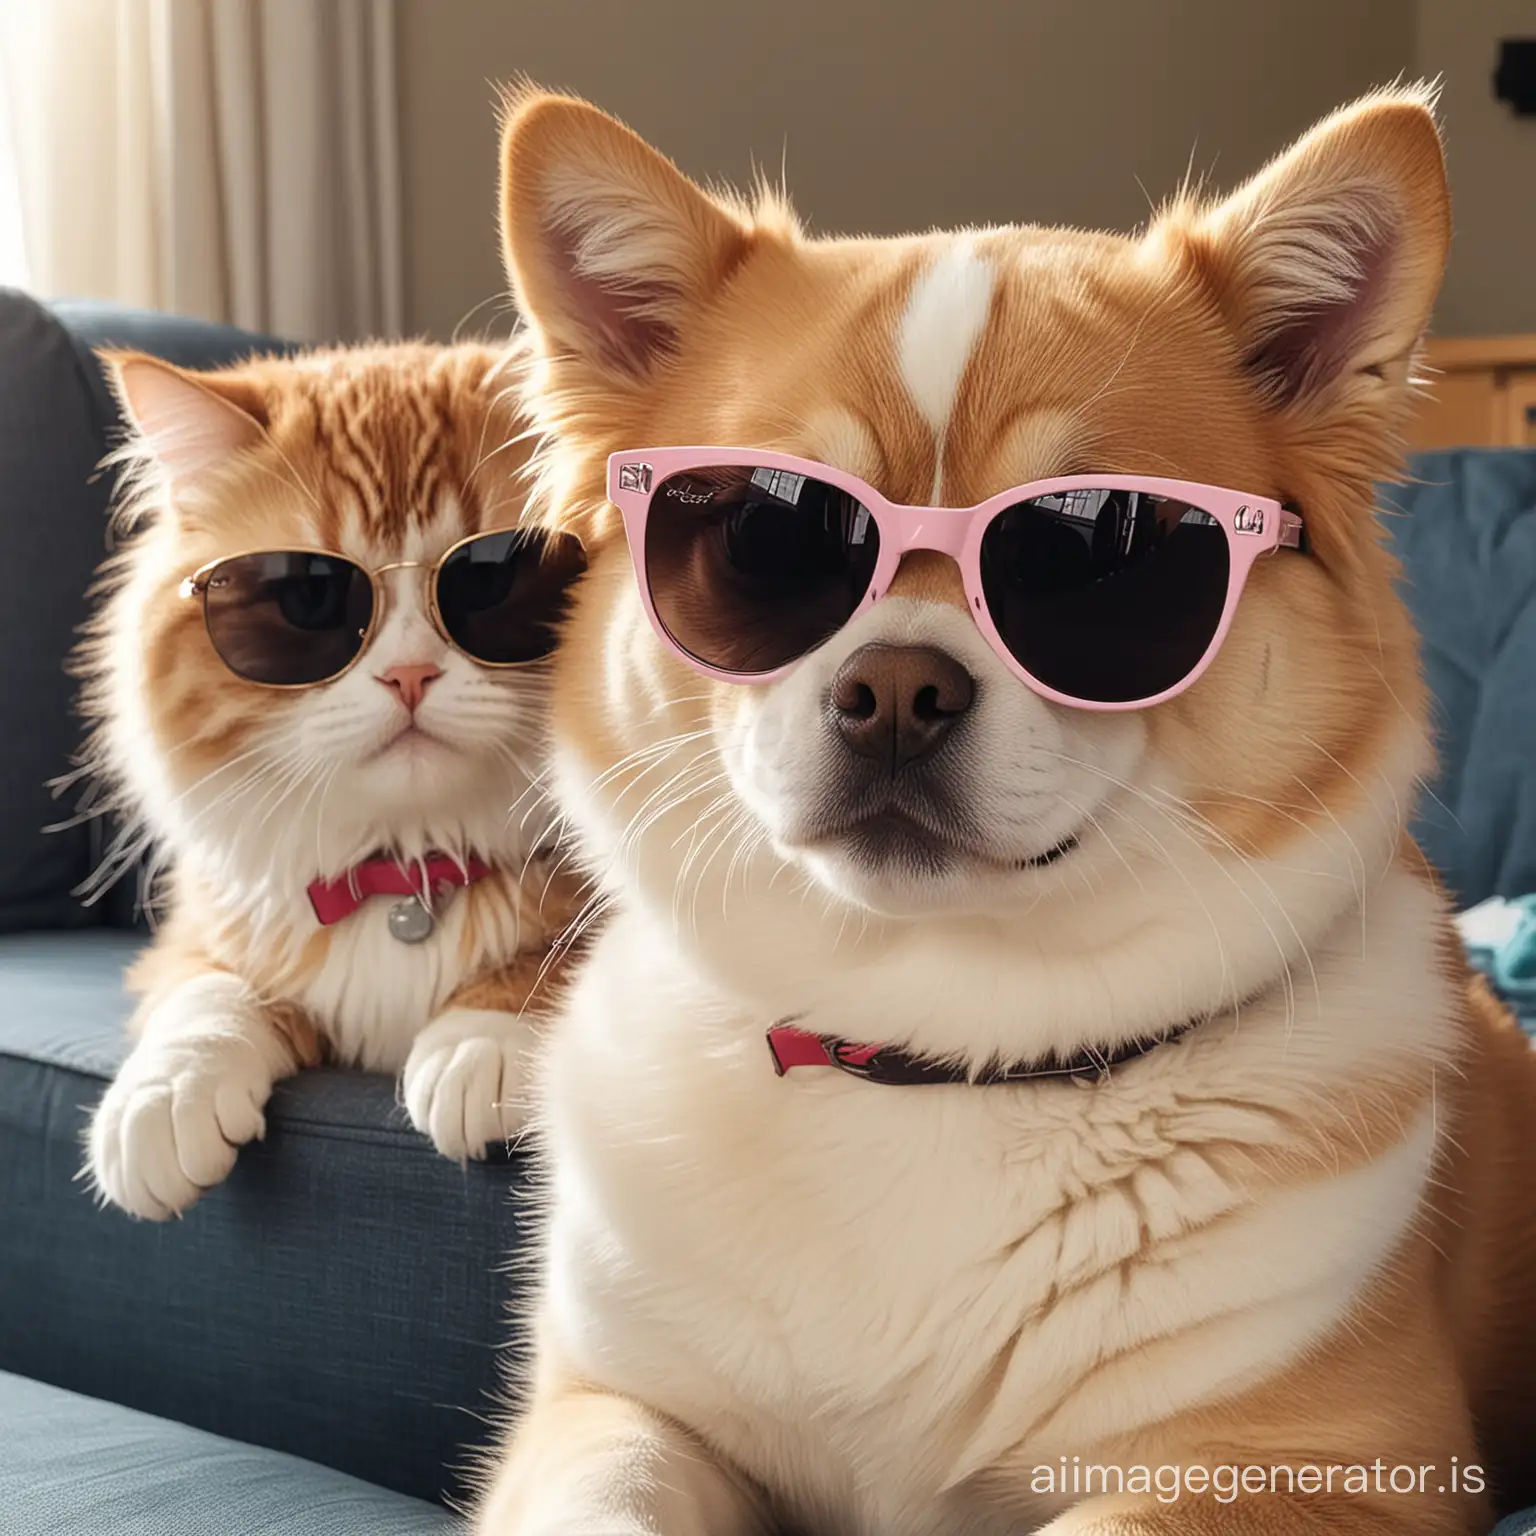 Adorable-Dog-and-Cat-Wearing-Stylish-Sunglasses